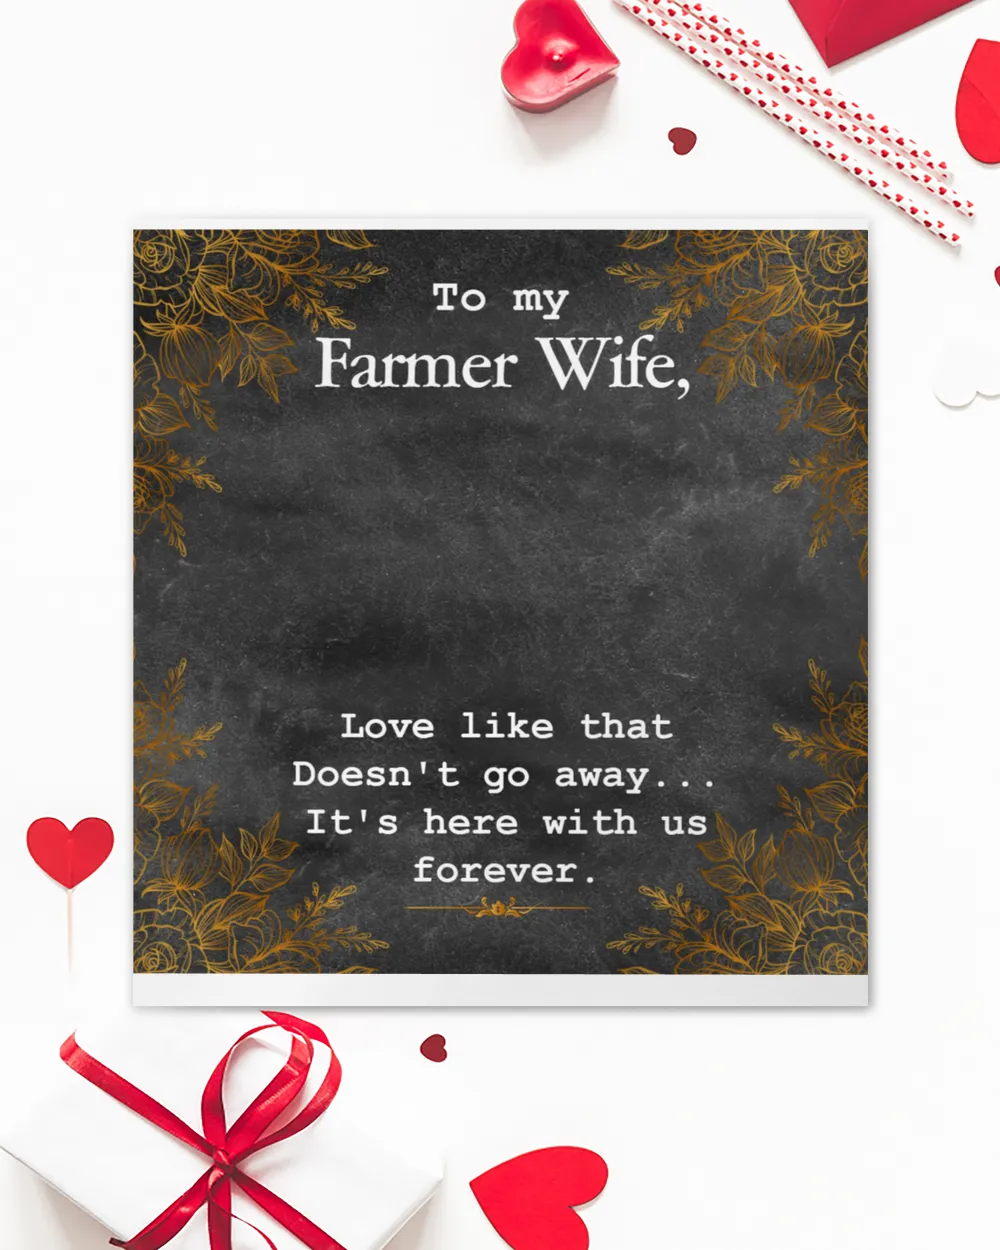 Farmer wife